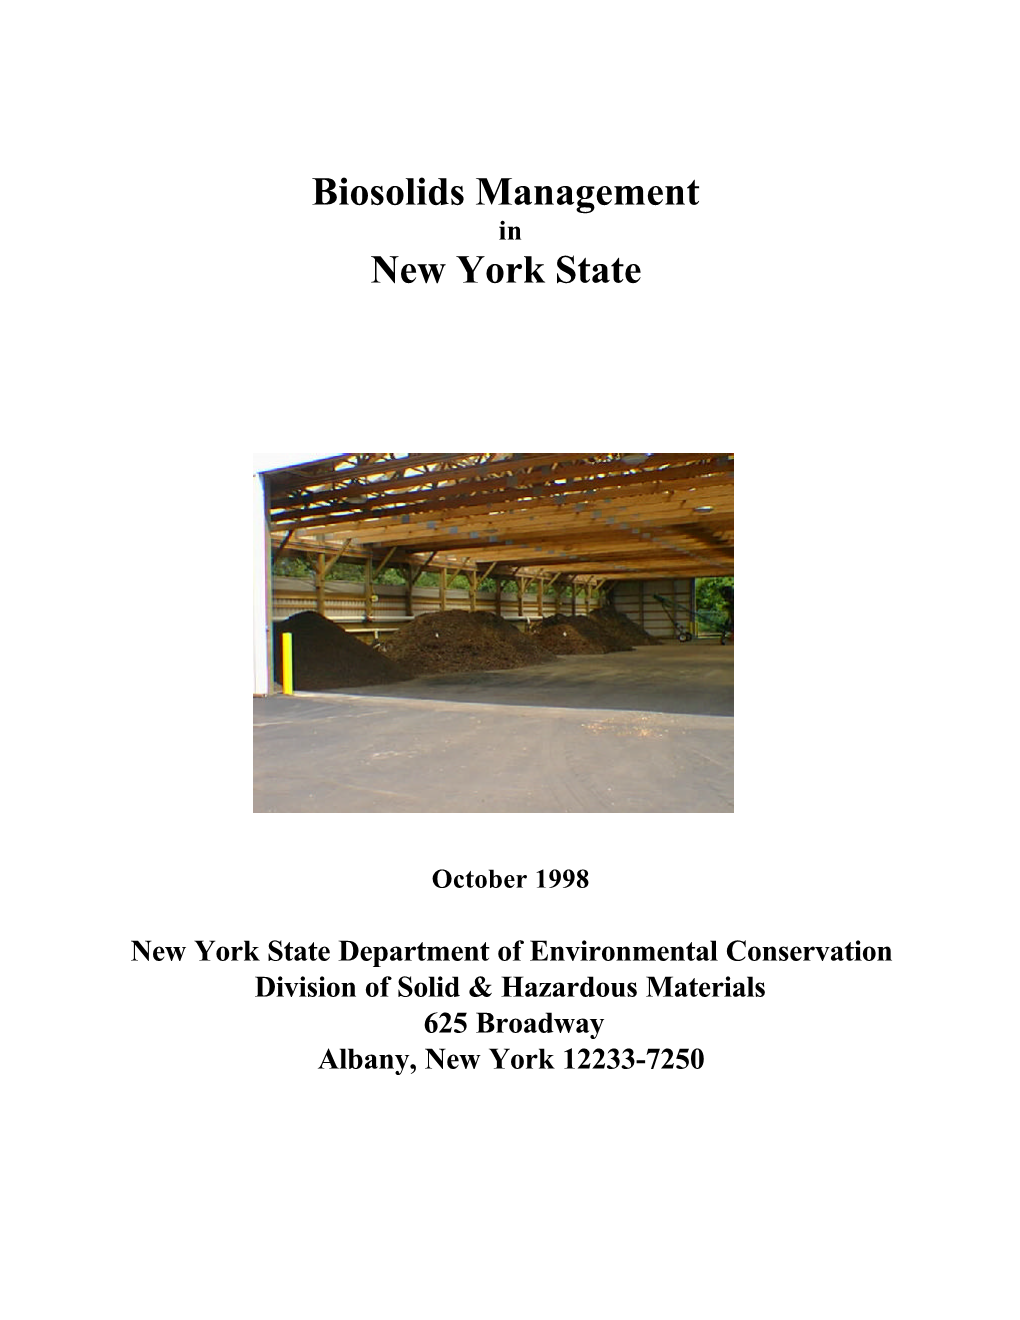 Biosolids Management New York State